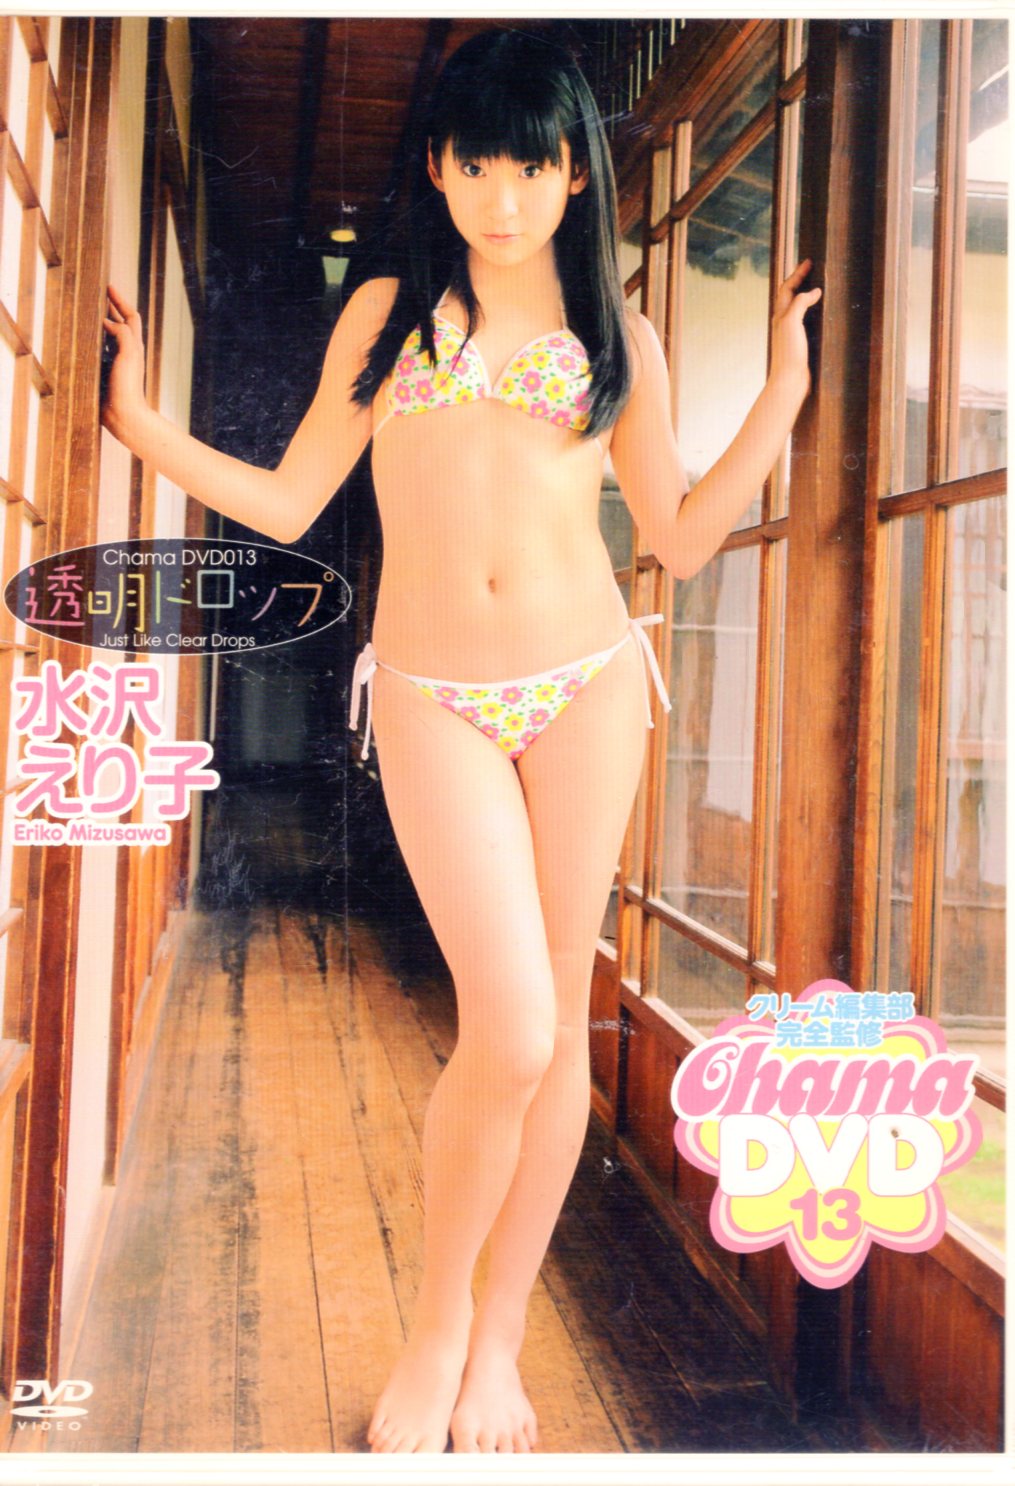 Wailea publication DVD Eriko Mizusawa Chama DVD 13 transparent drop Mandarake Online Shop image